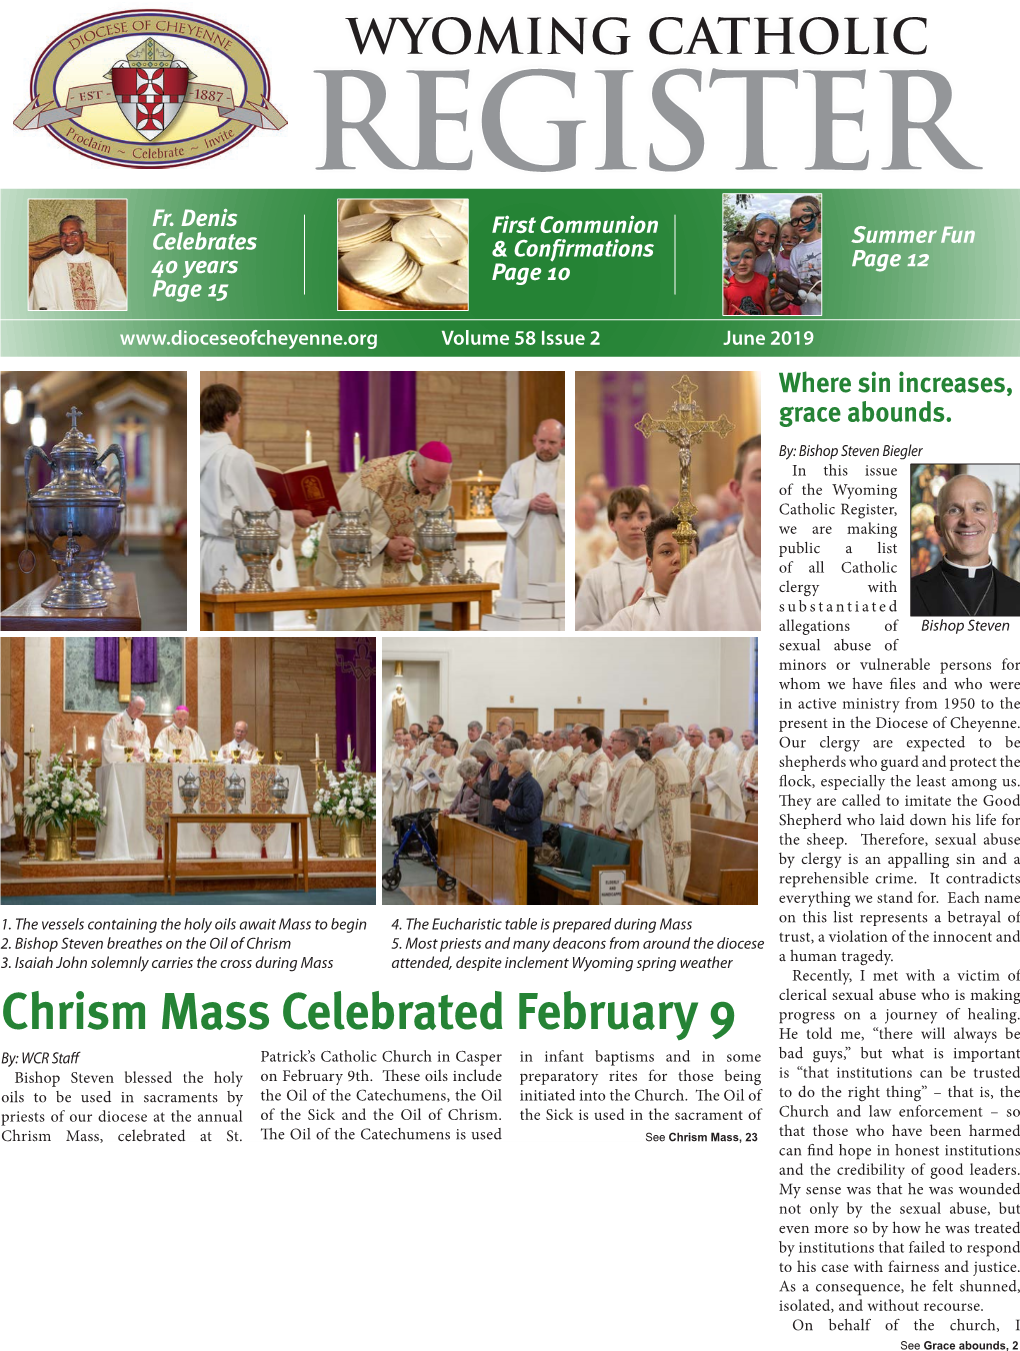 Chrism Mass Celebrated February 9